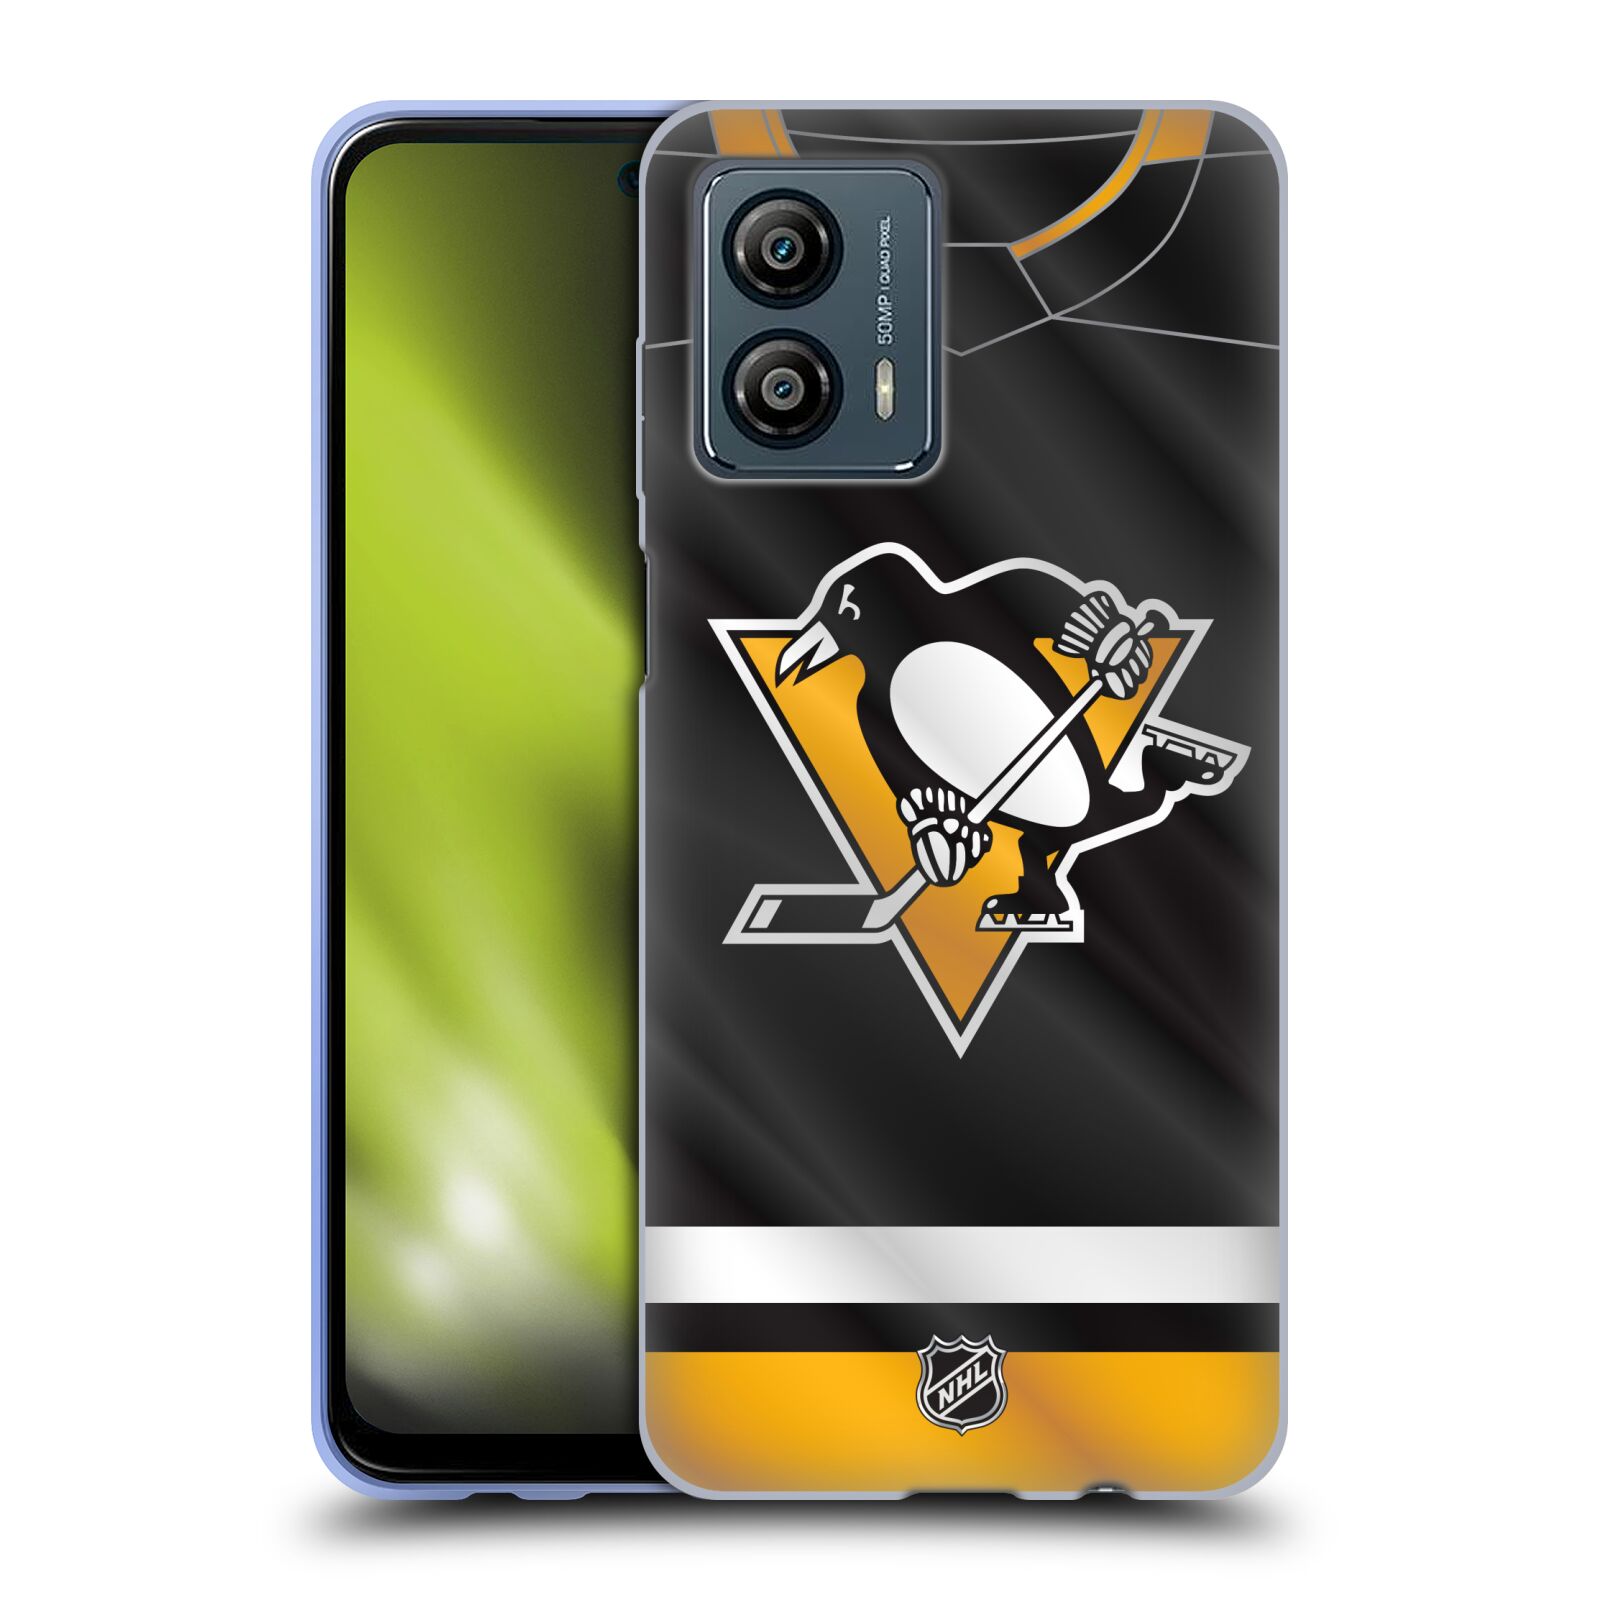 Silikonové pouzdro na mobil Motorola Moto G53 5G - NHL - Dres Pittsburgh Penguins (Silikonový kryt, obal, pouzdro na mobilní telefon Motorola Moto G53 5G s licencovaným motivem NHL - Dres Pittsburgh Penguins)